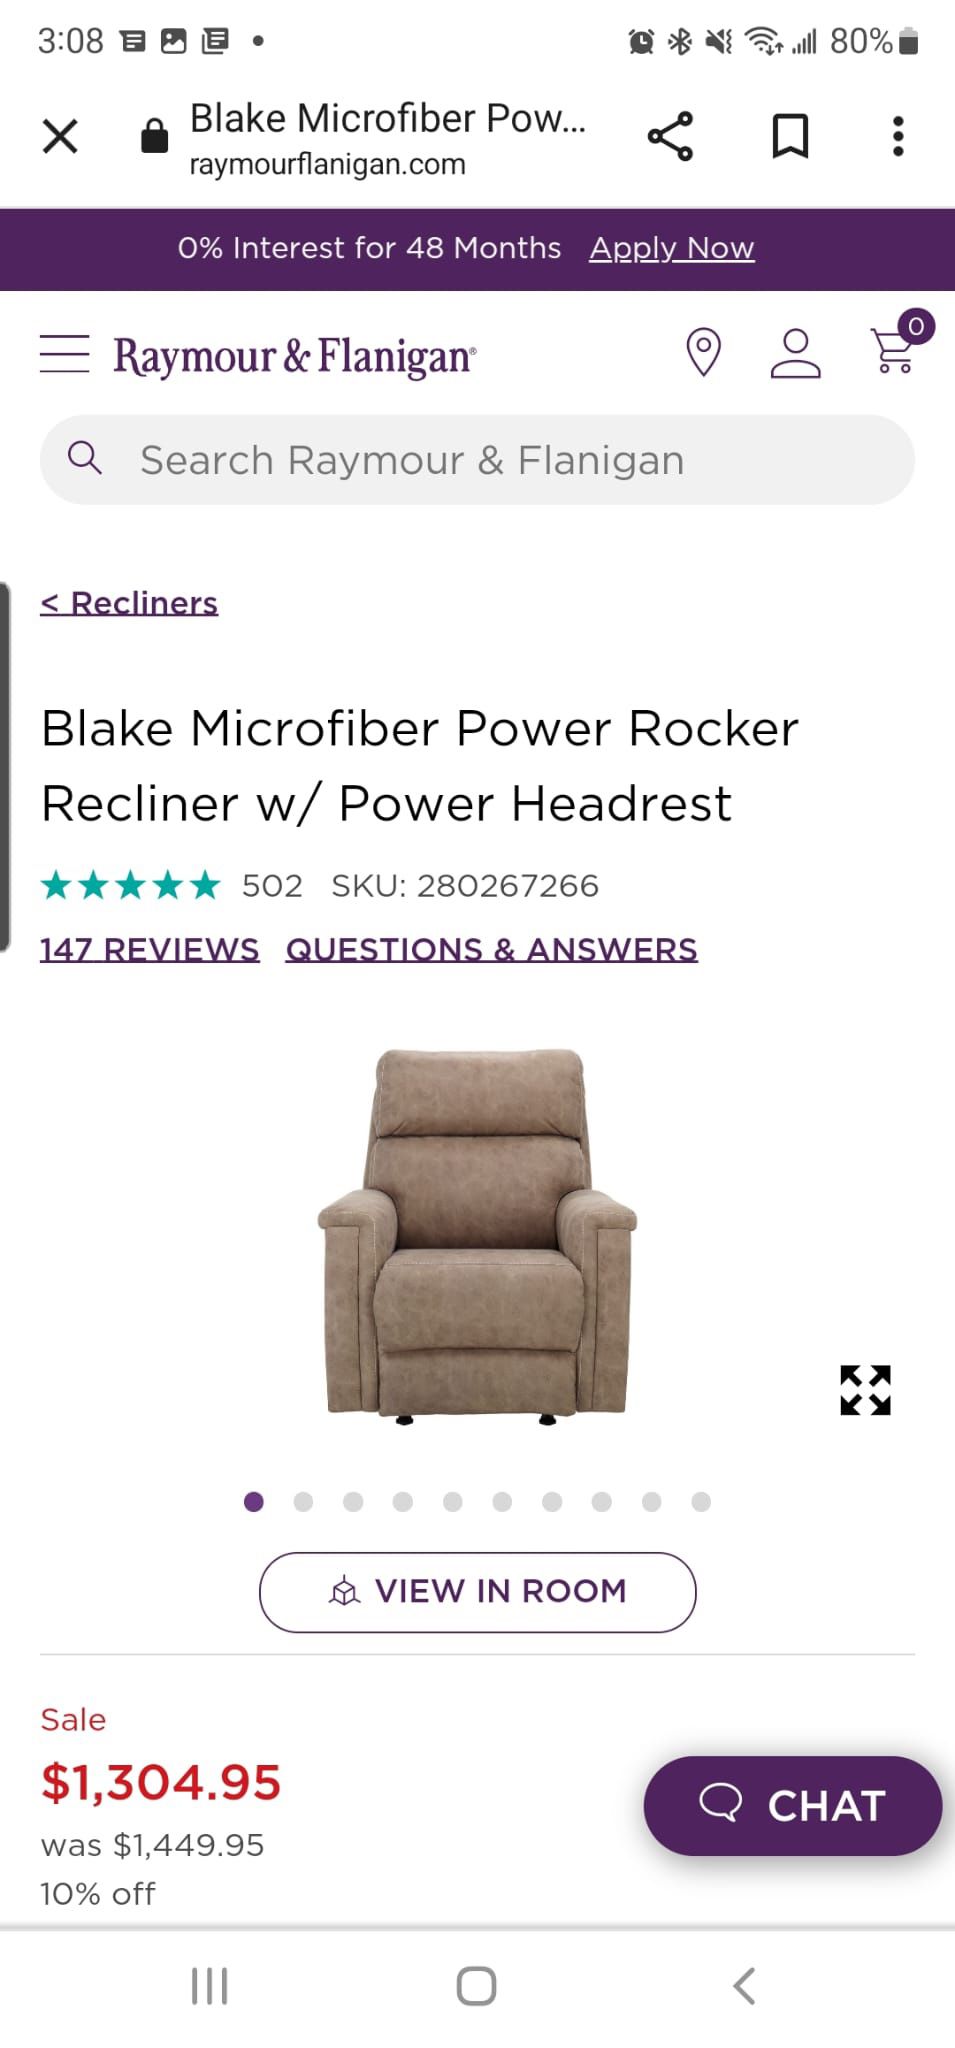 Blake Microfiber Power Rocker Recliner W/ Power Headrest 